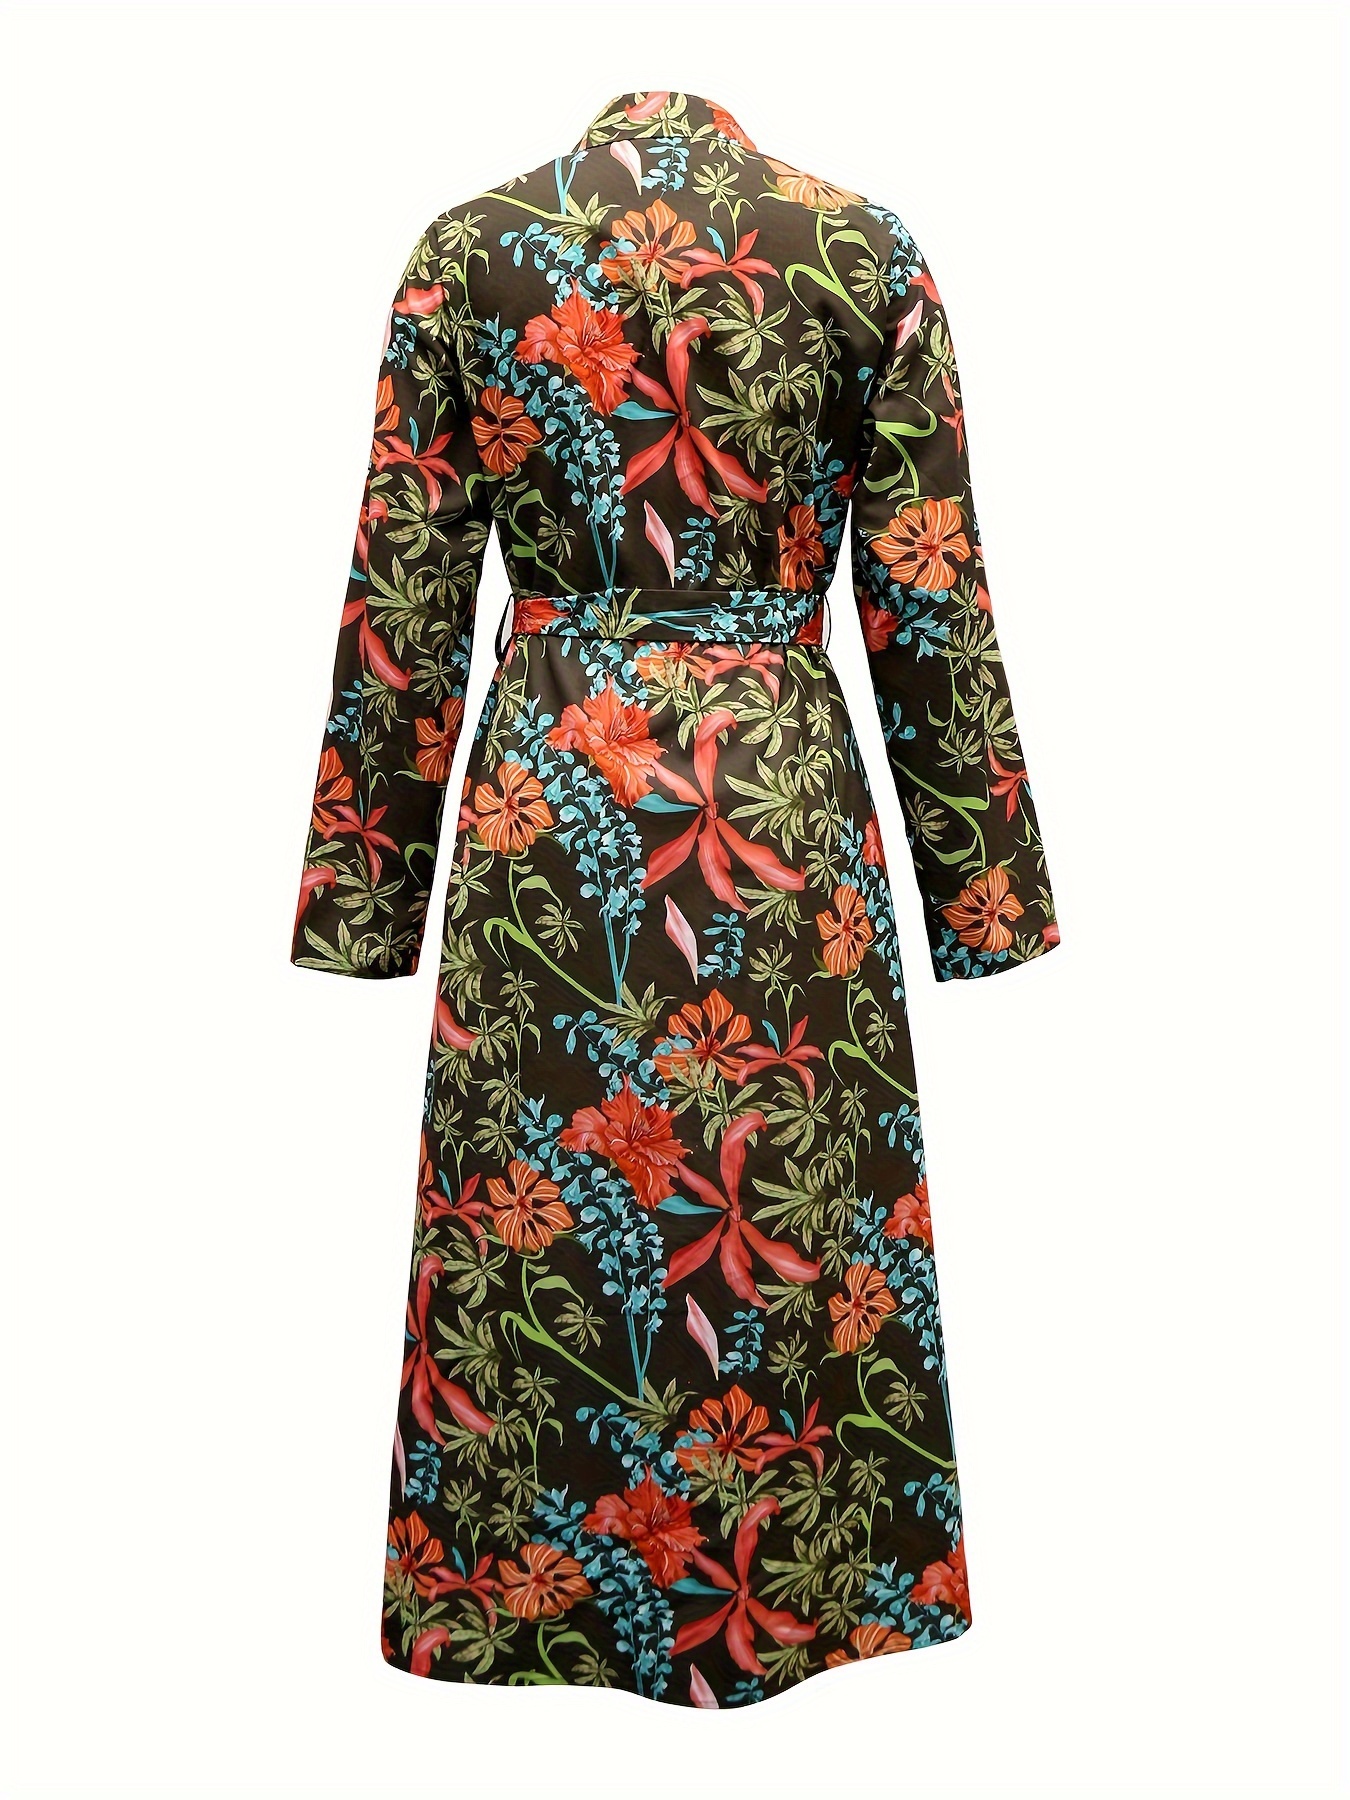 floral print midi dress elegant button front long sleeve dress womens clothing